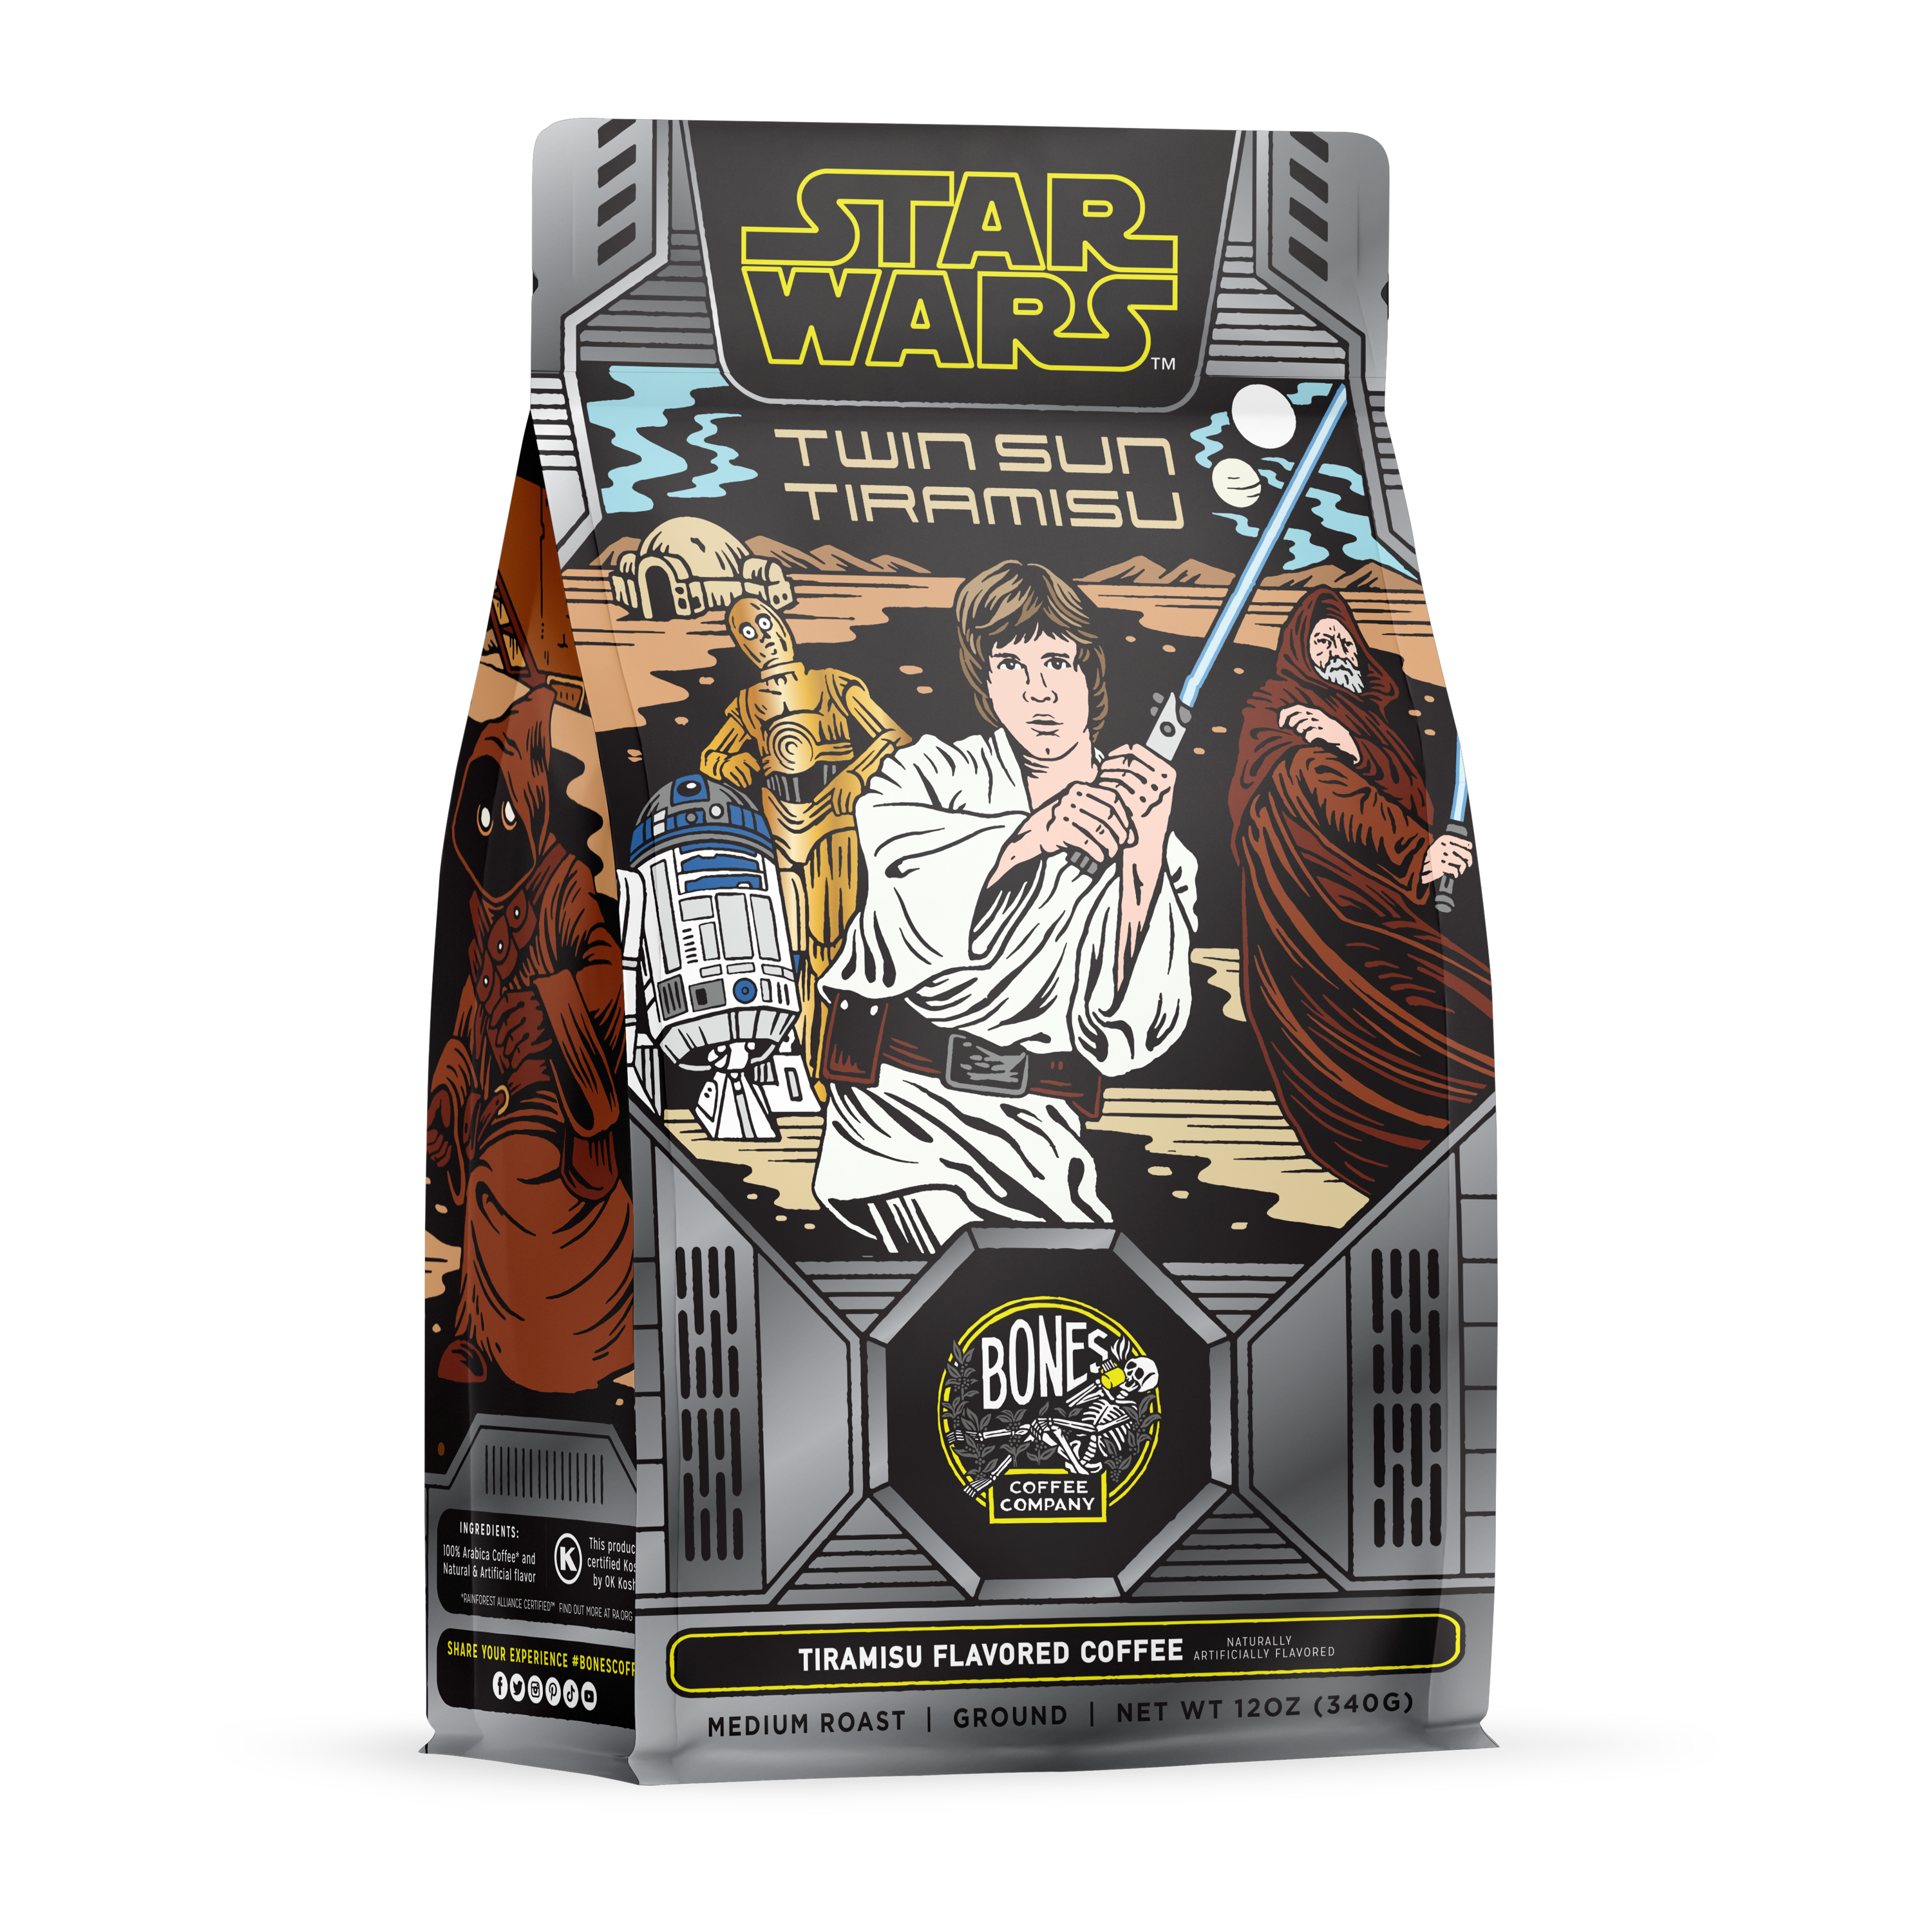 The front of a 12 ounce bag of Bones Coffee Company Twin Sun Tiramisu flavored coffee. Its flavor is tiramisu, and its art shows Luke Skywalker, R2D2, C3PO, and Obi Wan Kenobi on it.